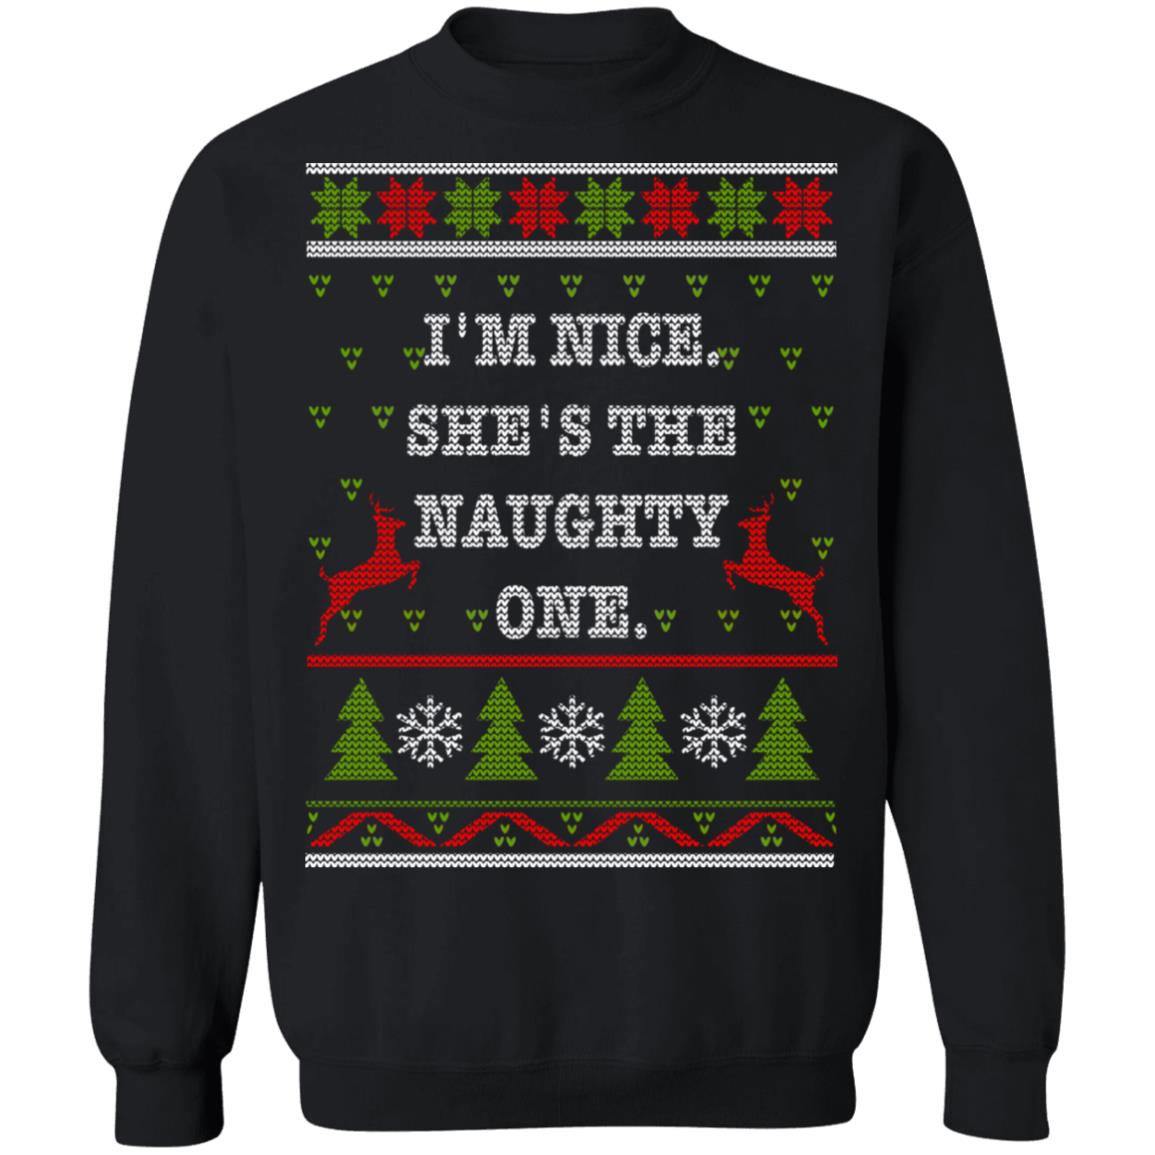 redirect10112021101058 4 490x490px I'm Nice She's The Naughty One Couples Christmas Sweatshirt